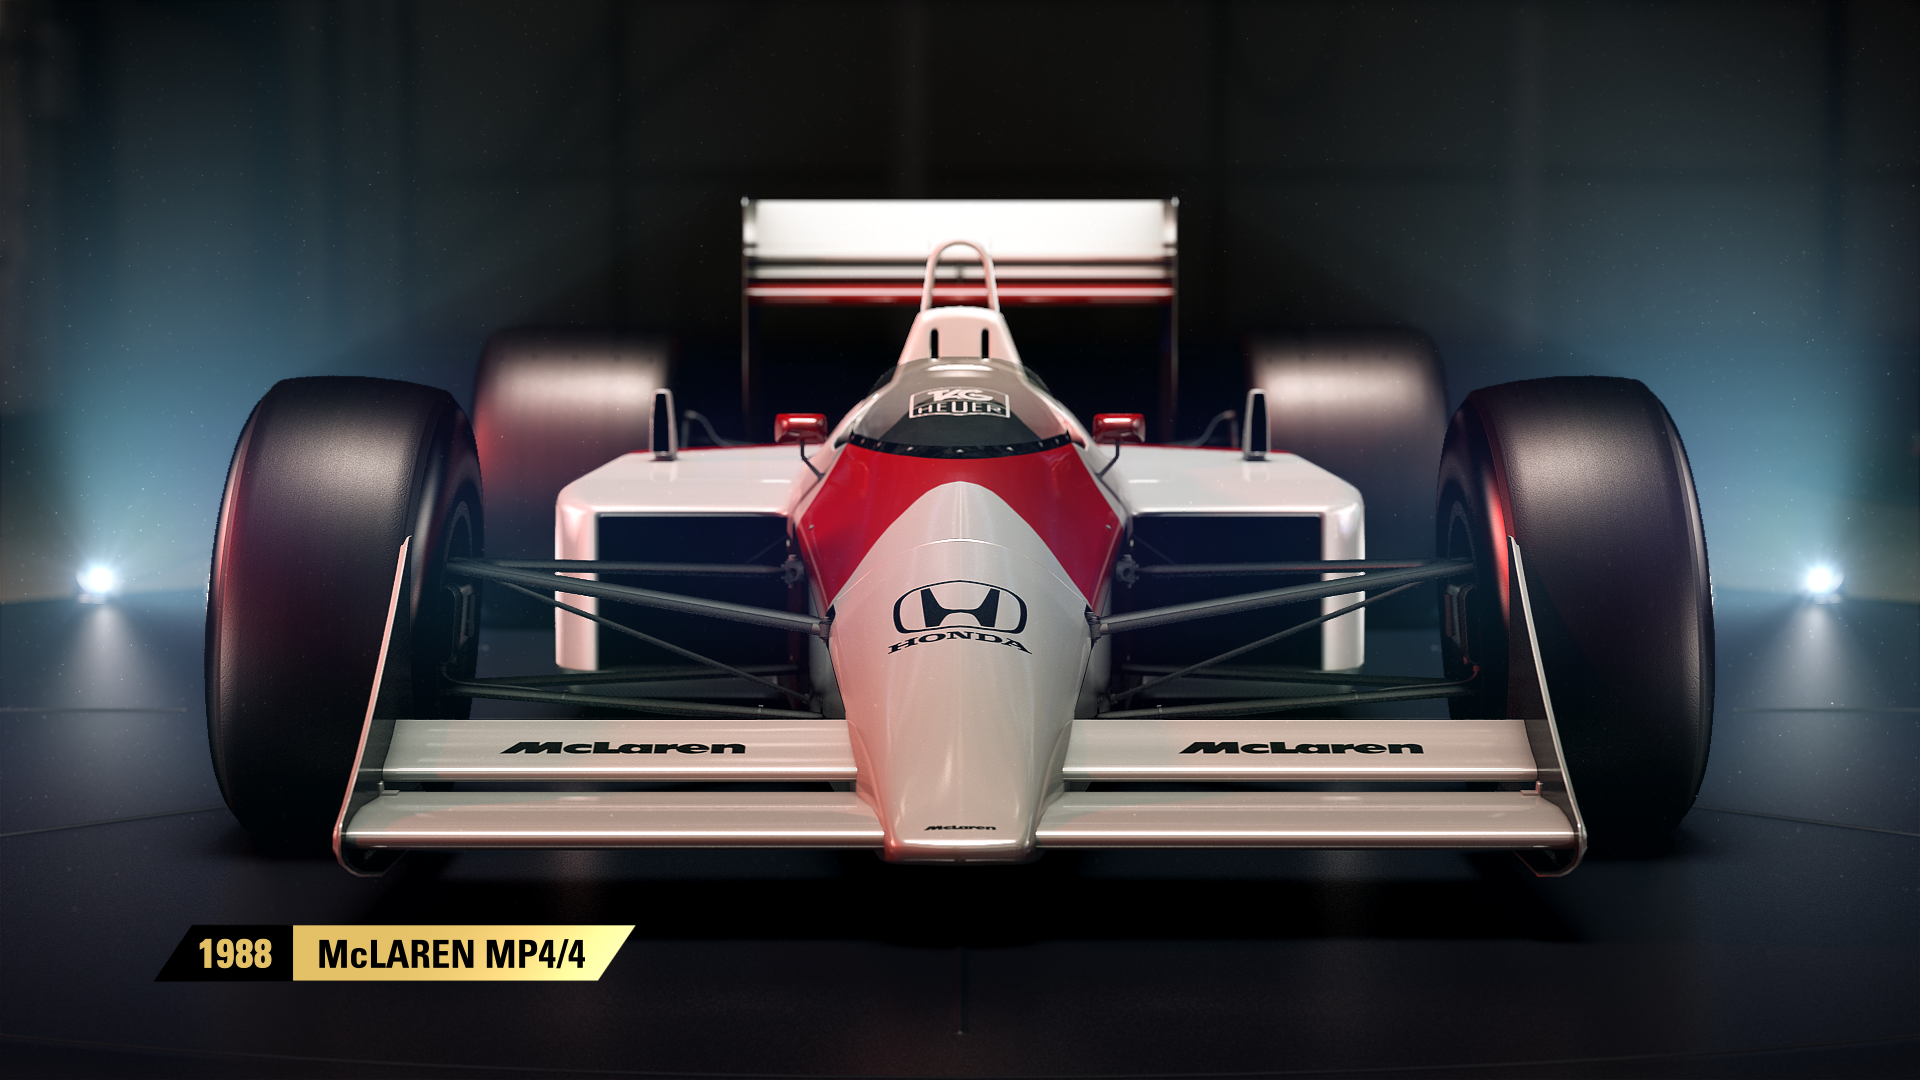 F1 2017 PC classic cars